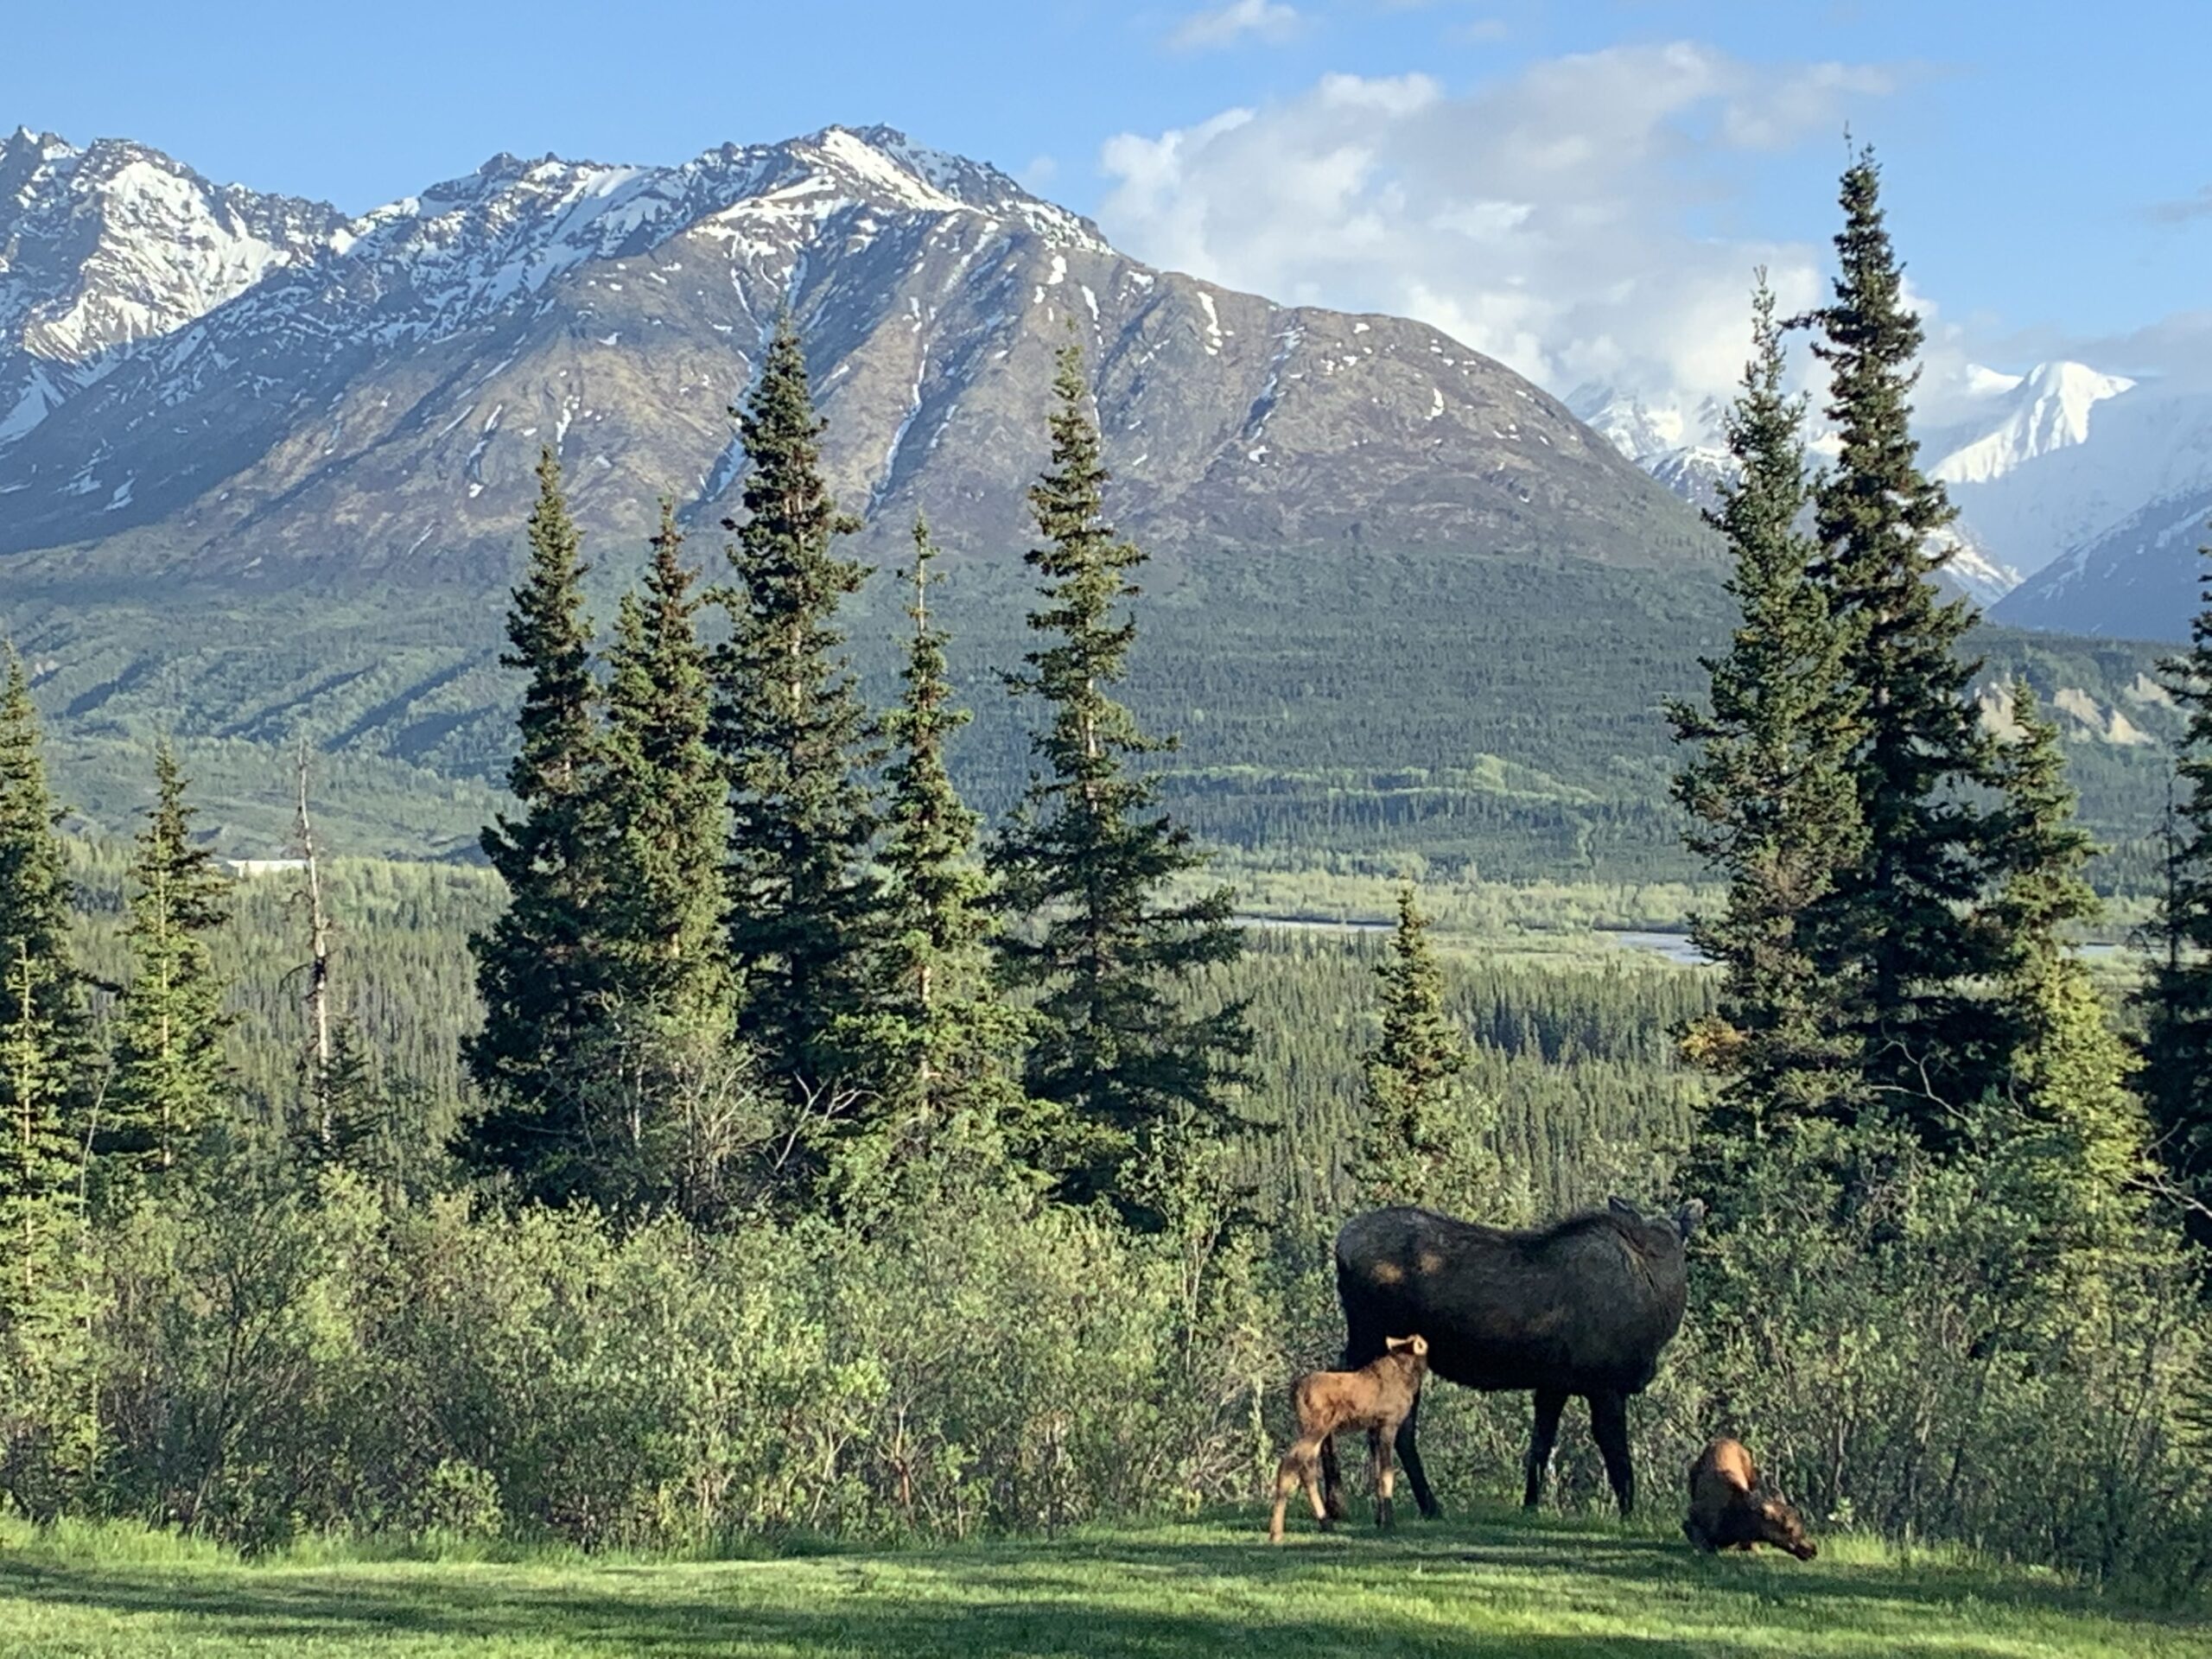 Alaska Wildlife in the mountains